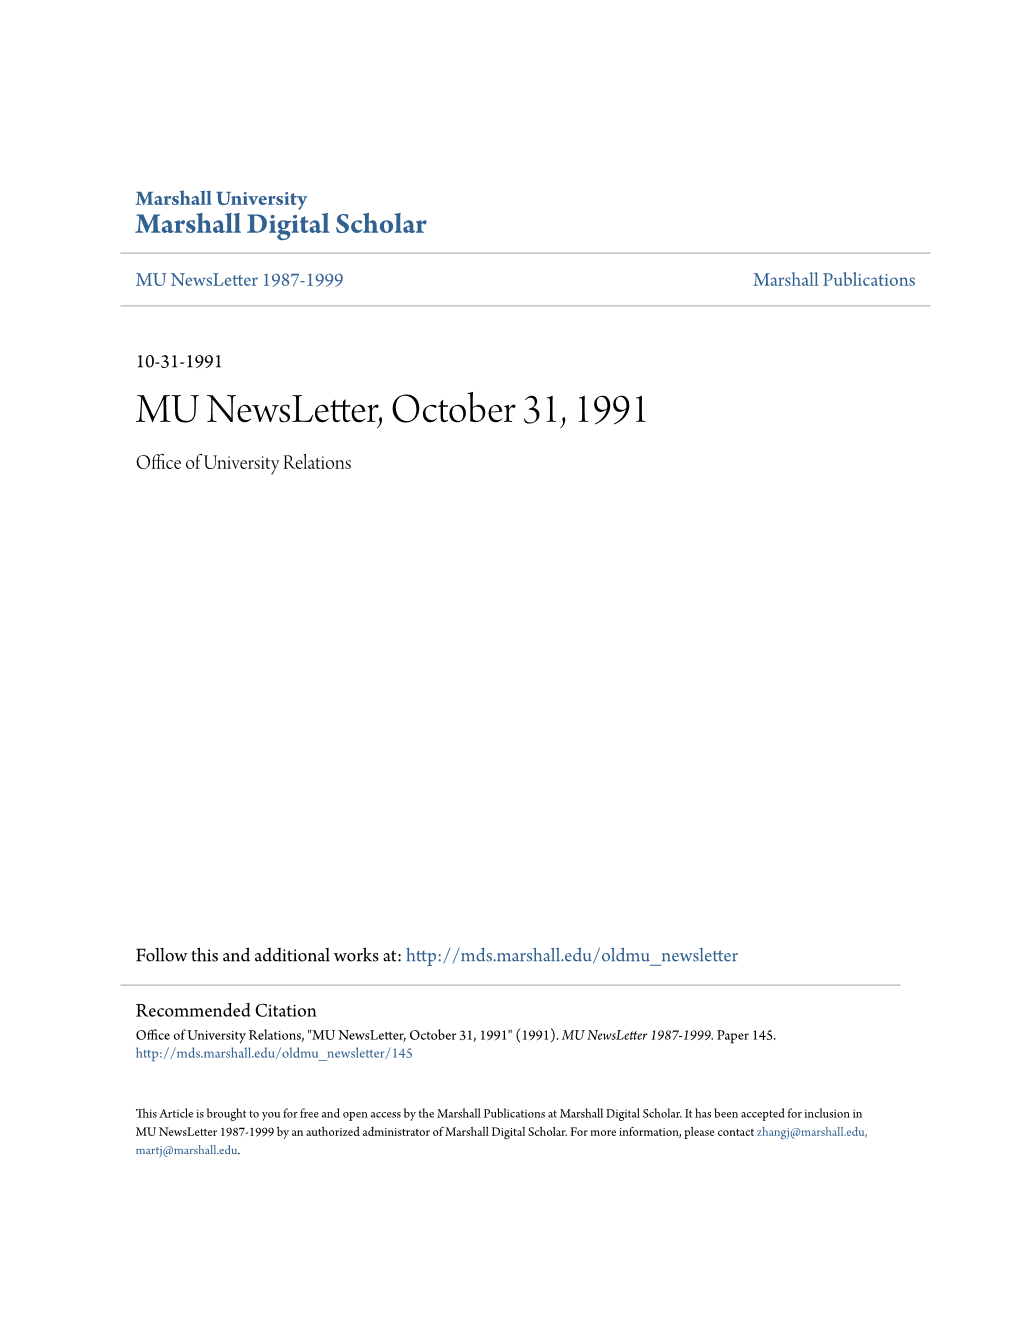 MU Newsletter, October 31, 1991 Office Ofni U Versity Relations